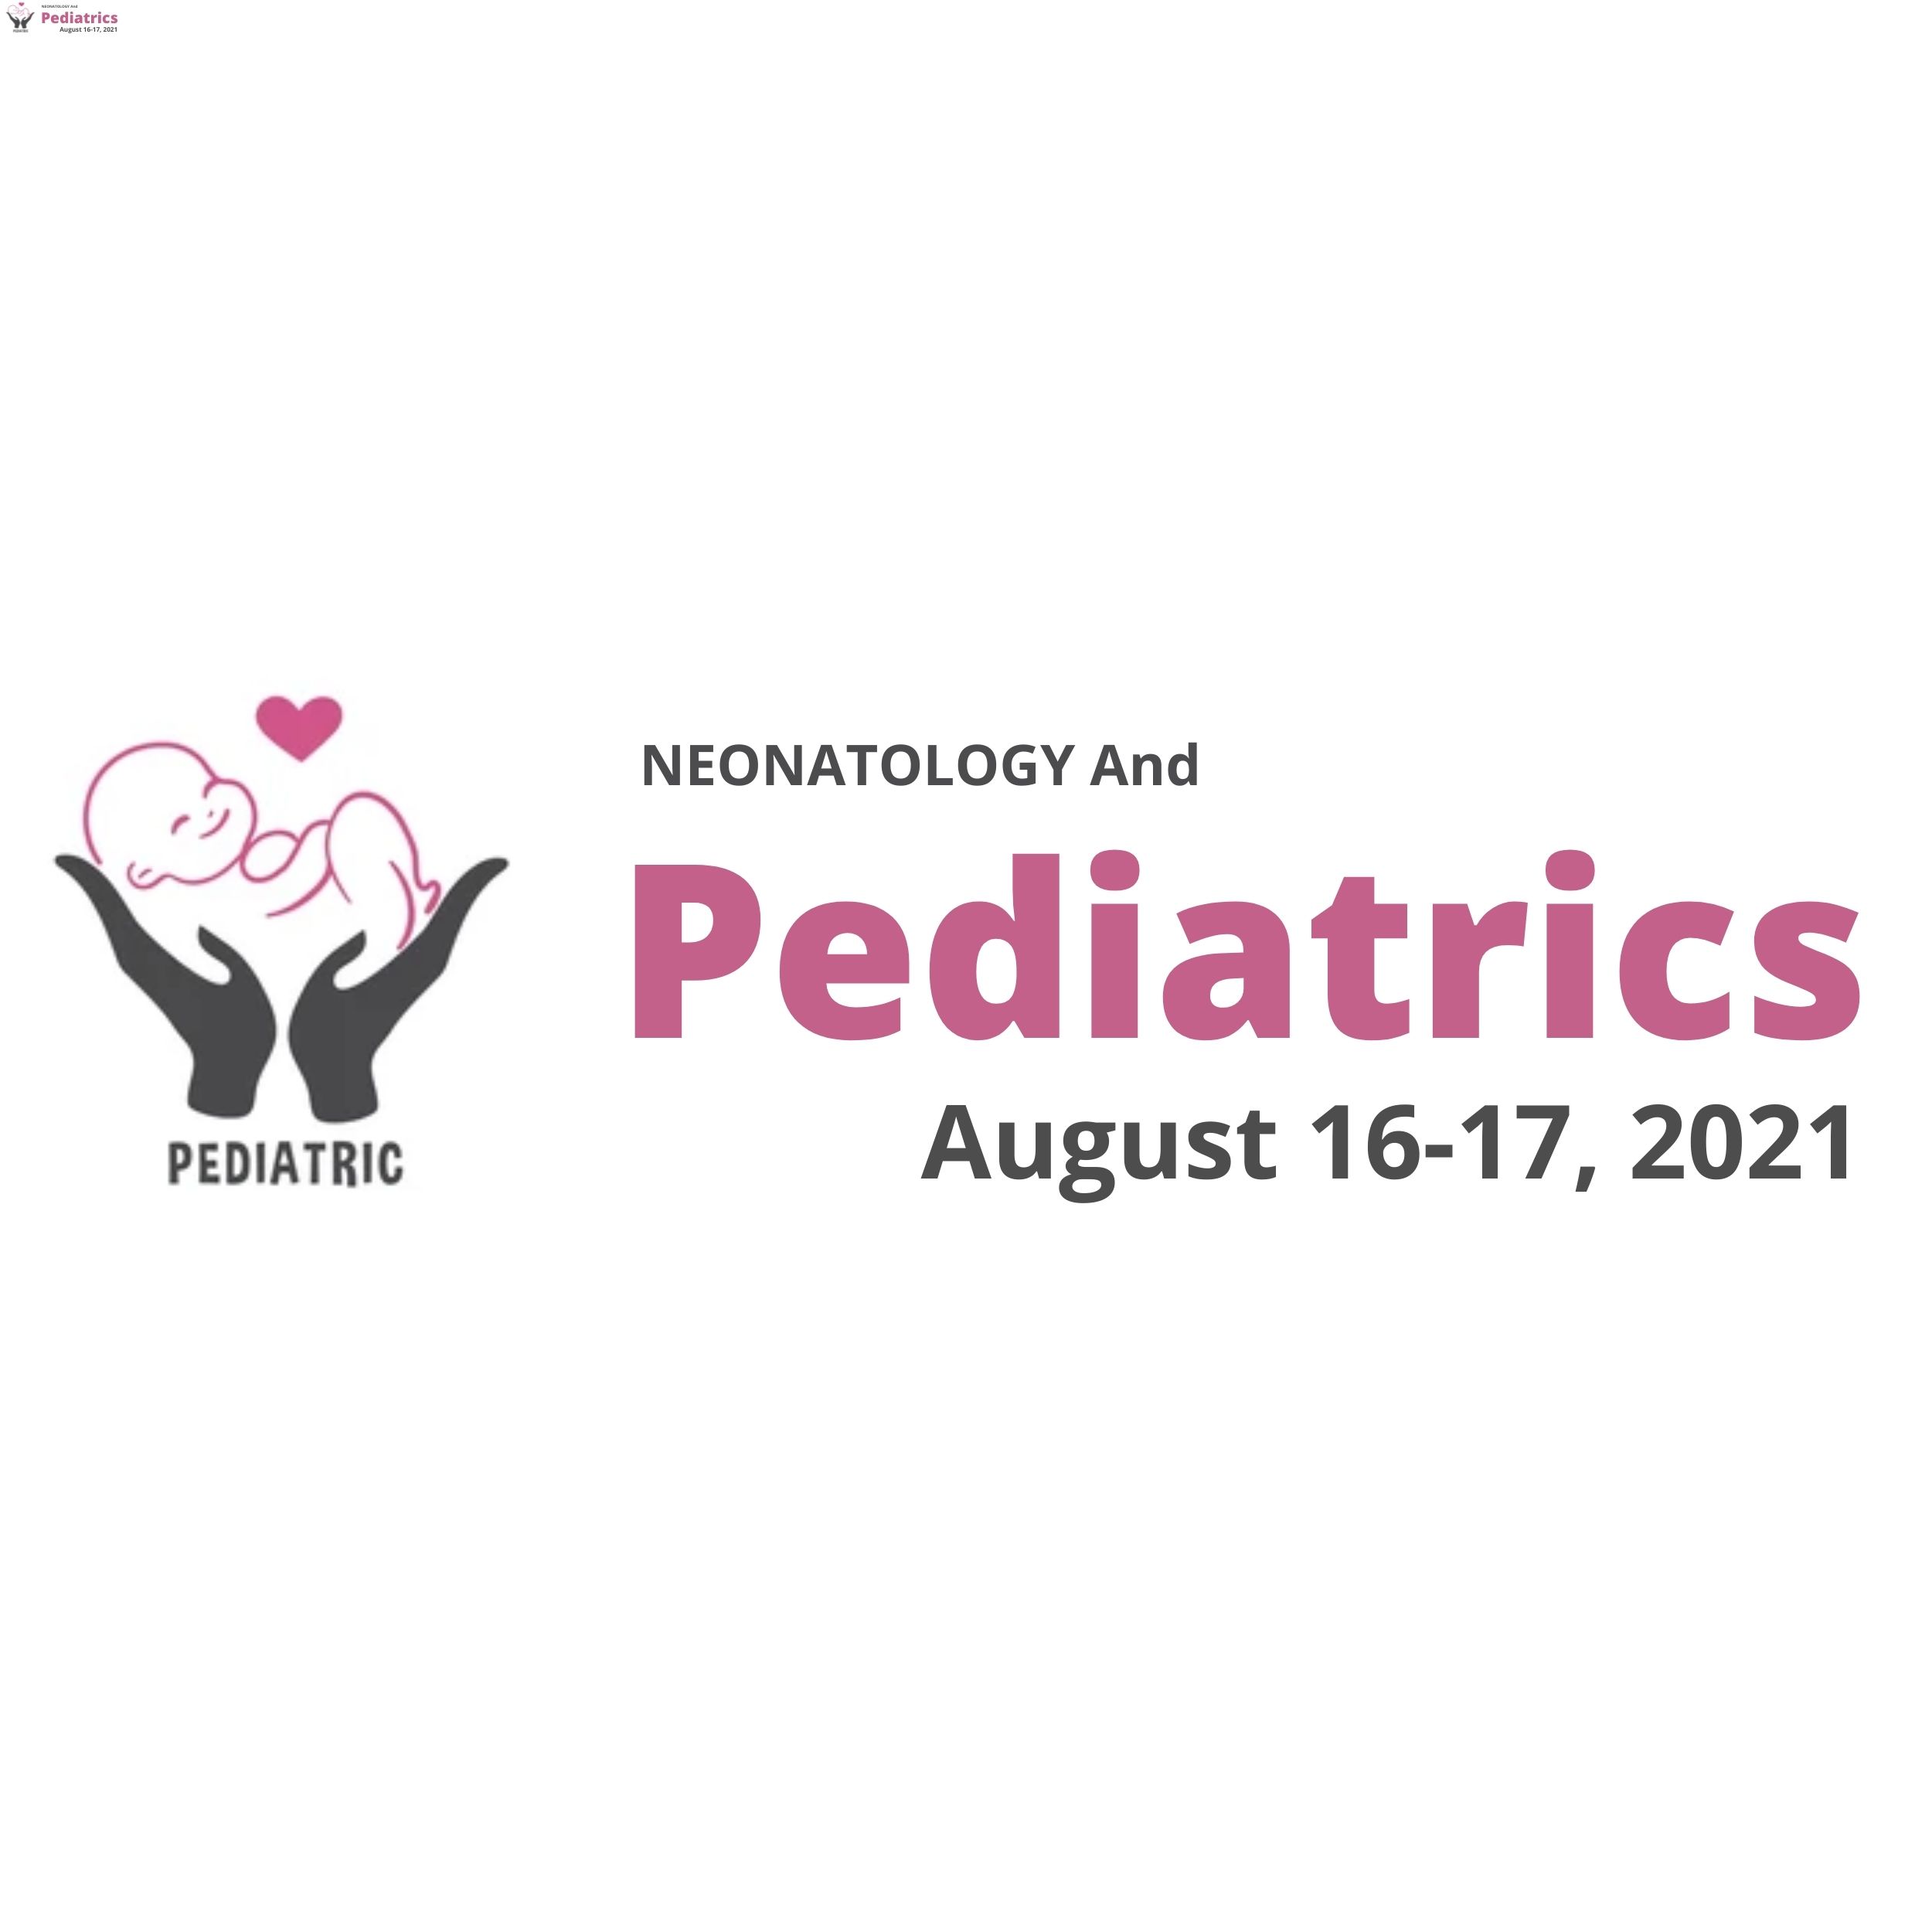 International E-Conference on Pediatrics and Neonatology